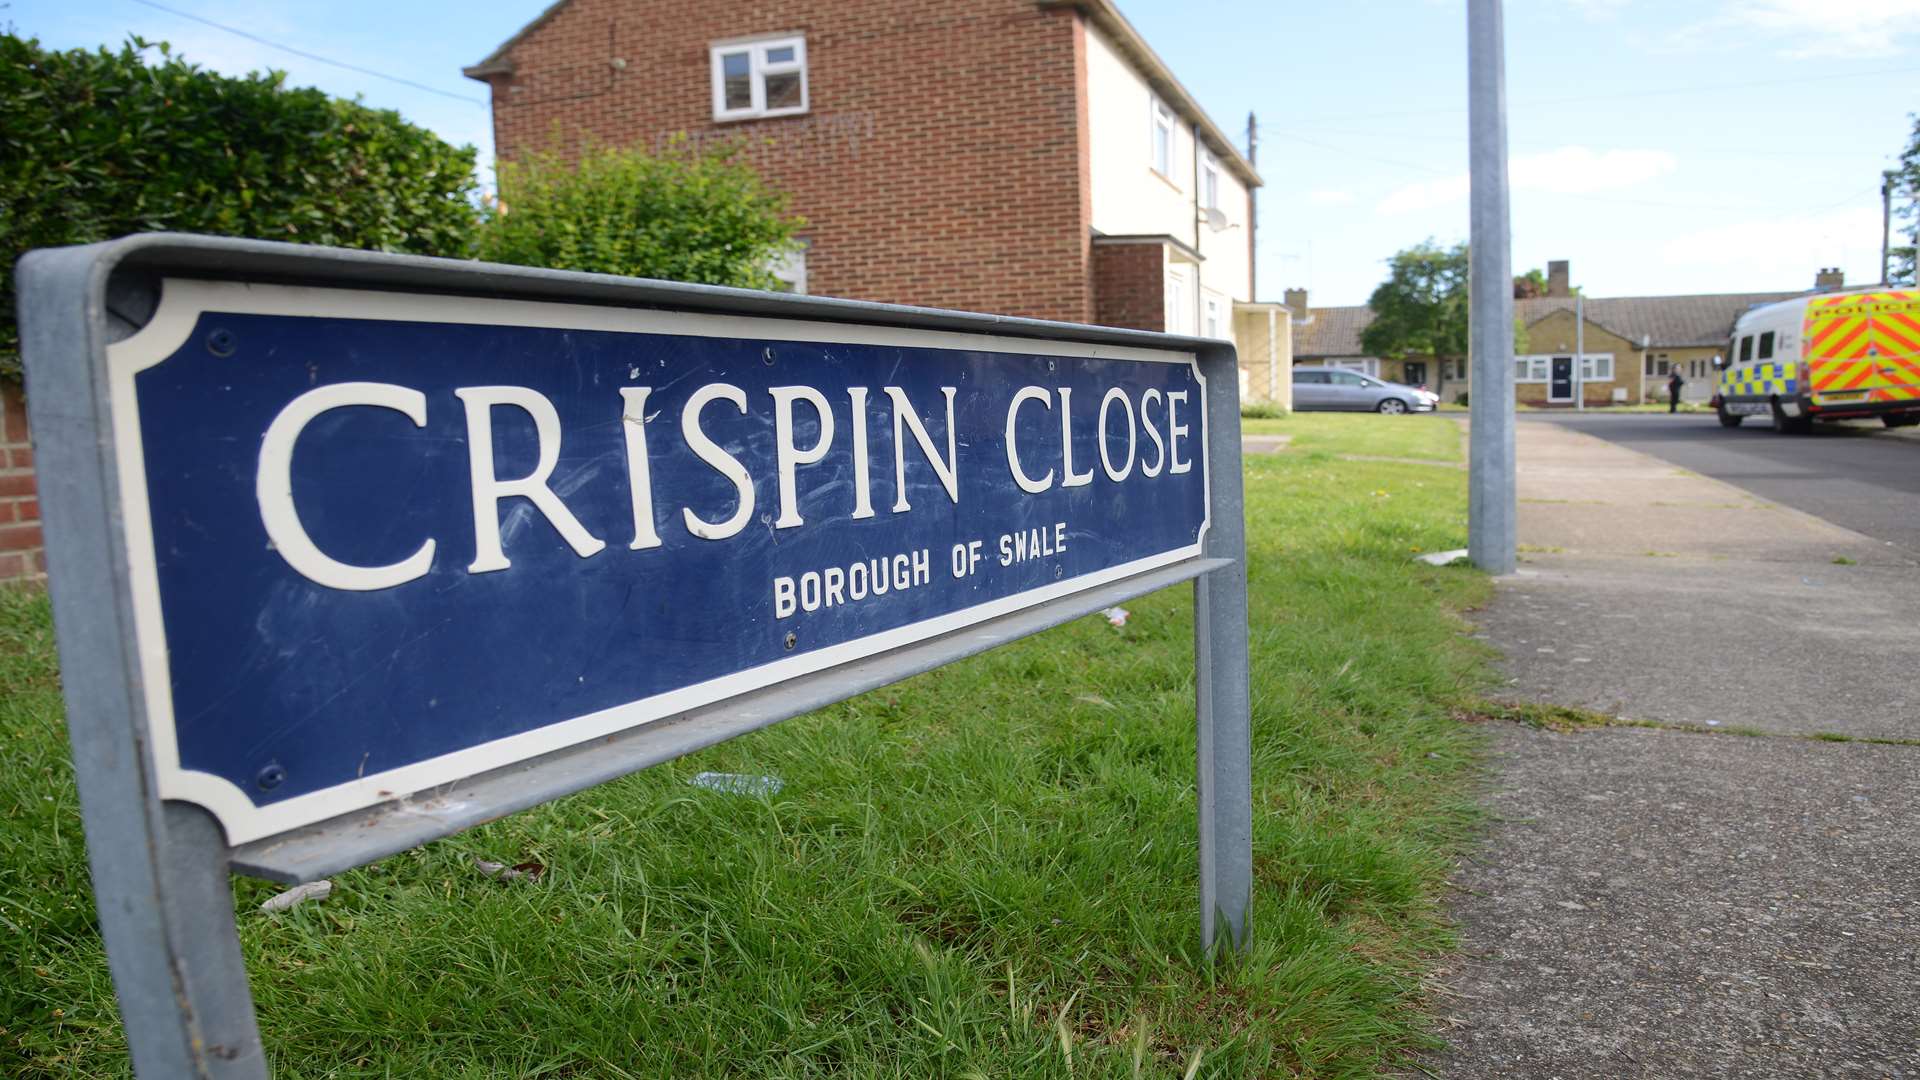 Mr Messenger died in Crispin Close, Faversham